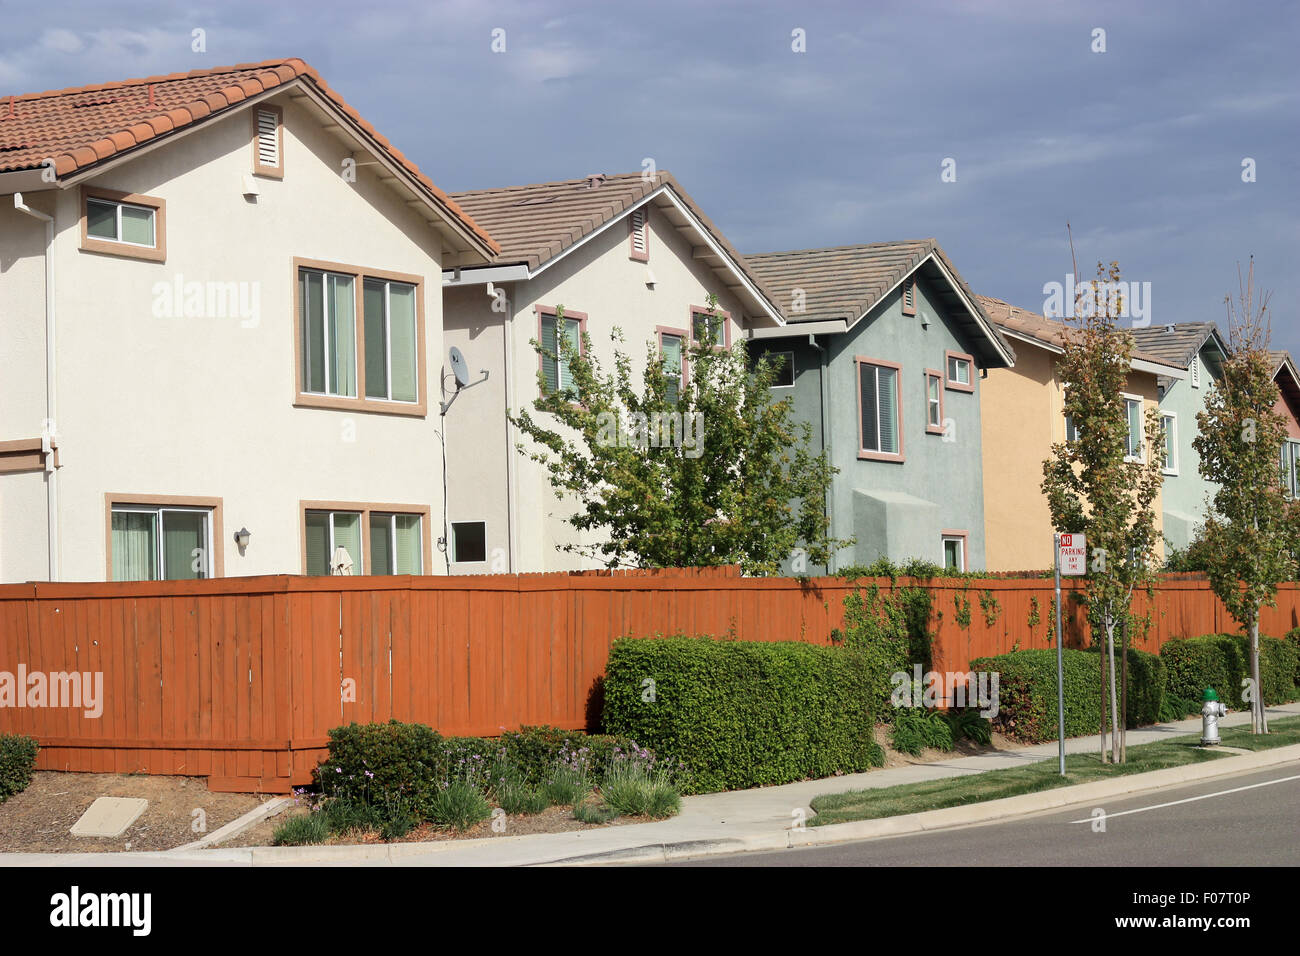 Row of new houses in suburban neighborhood Stock Photo